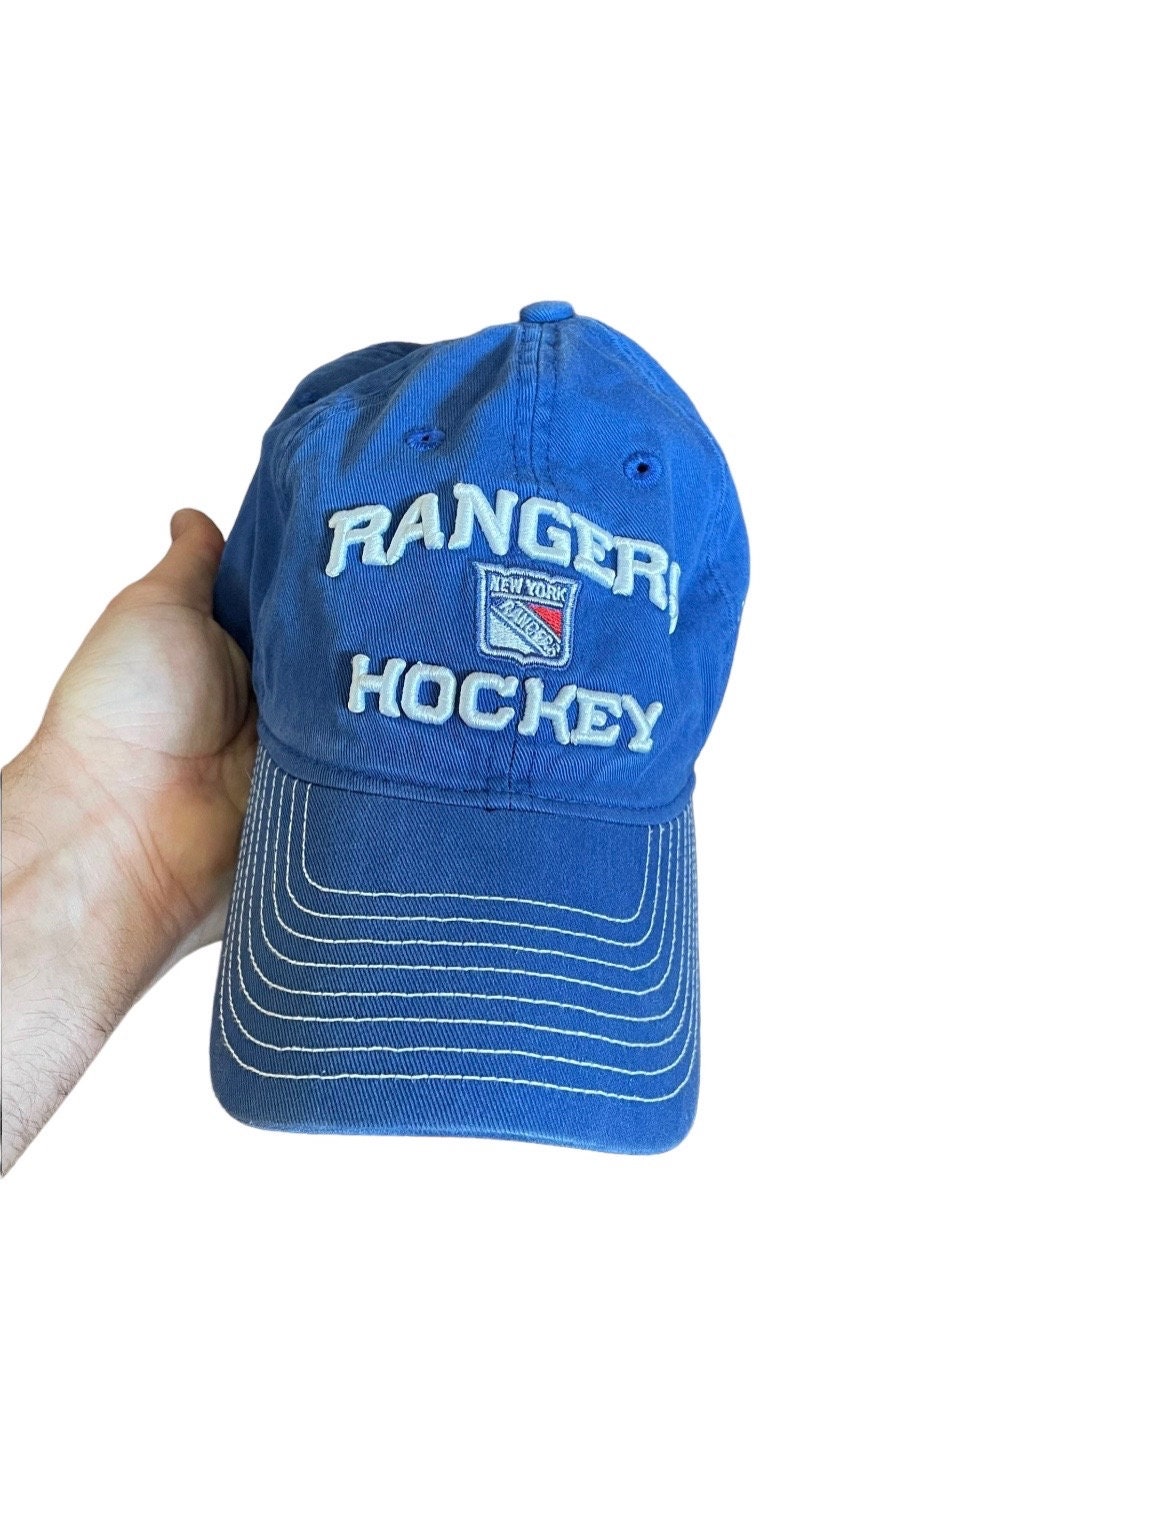 St. Louis Blues NHL Hockey Hat Cap Reebok Center Ice Size L/XL